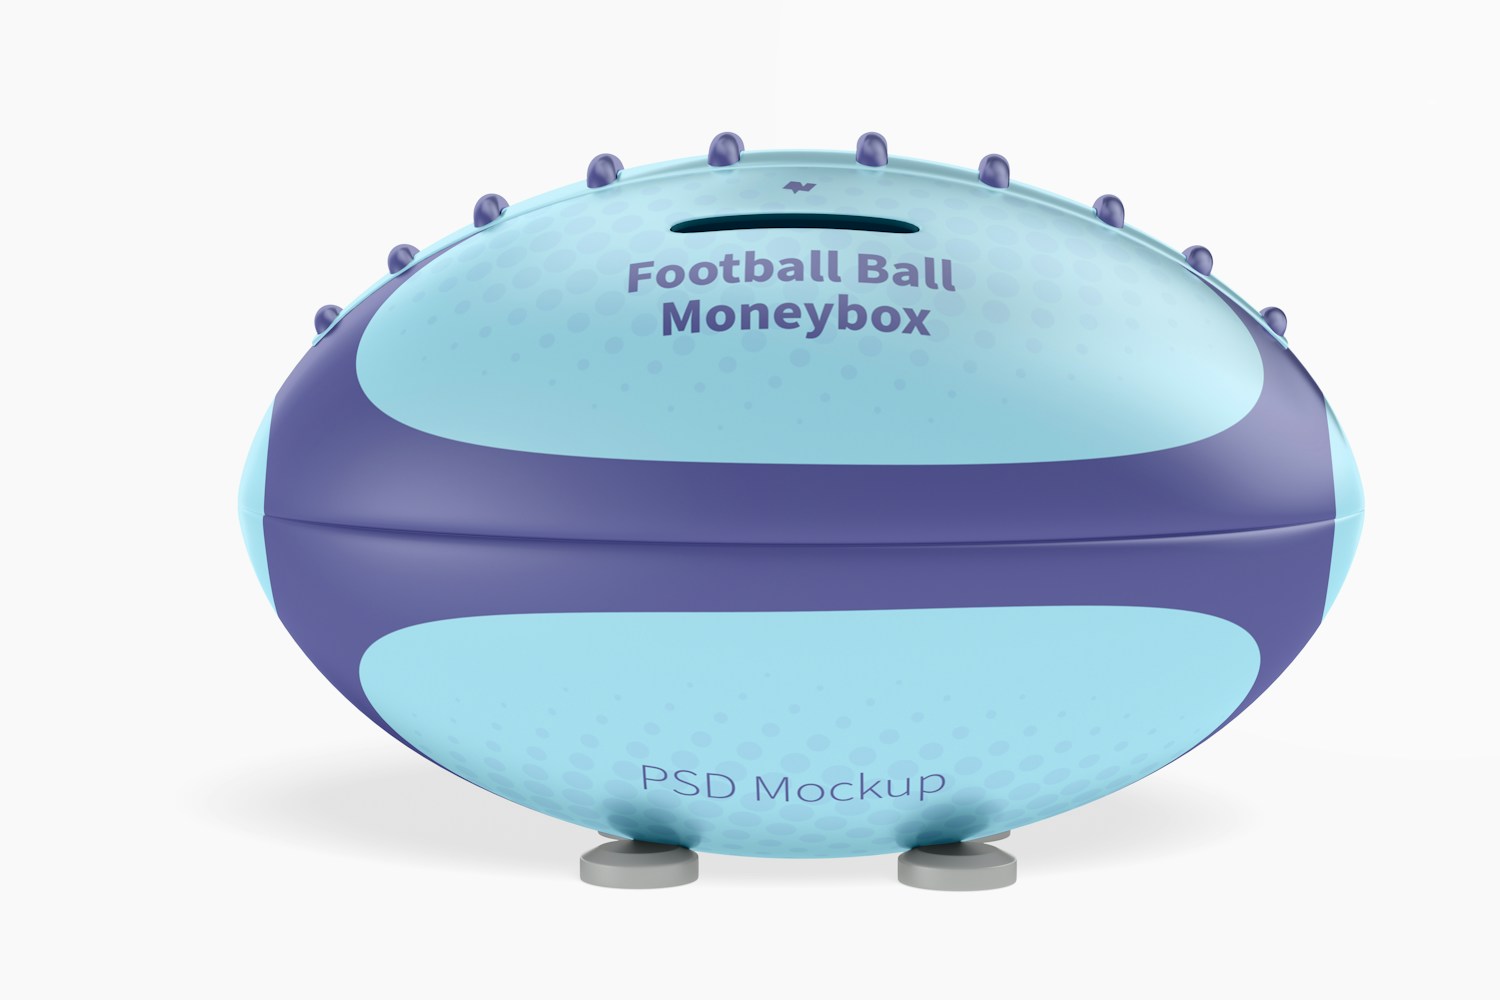 Metal Football Ball Moneybox Mockup